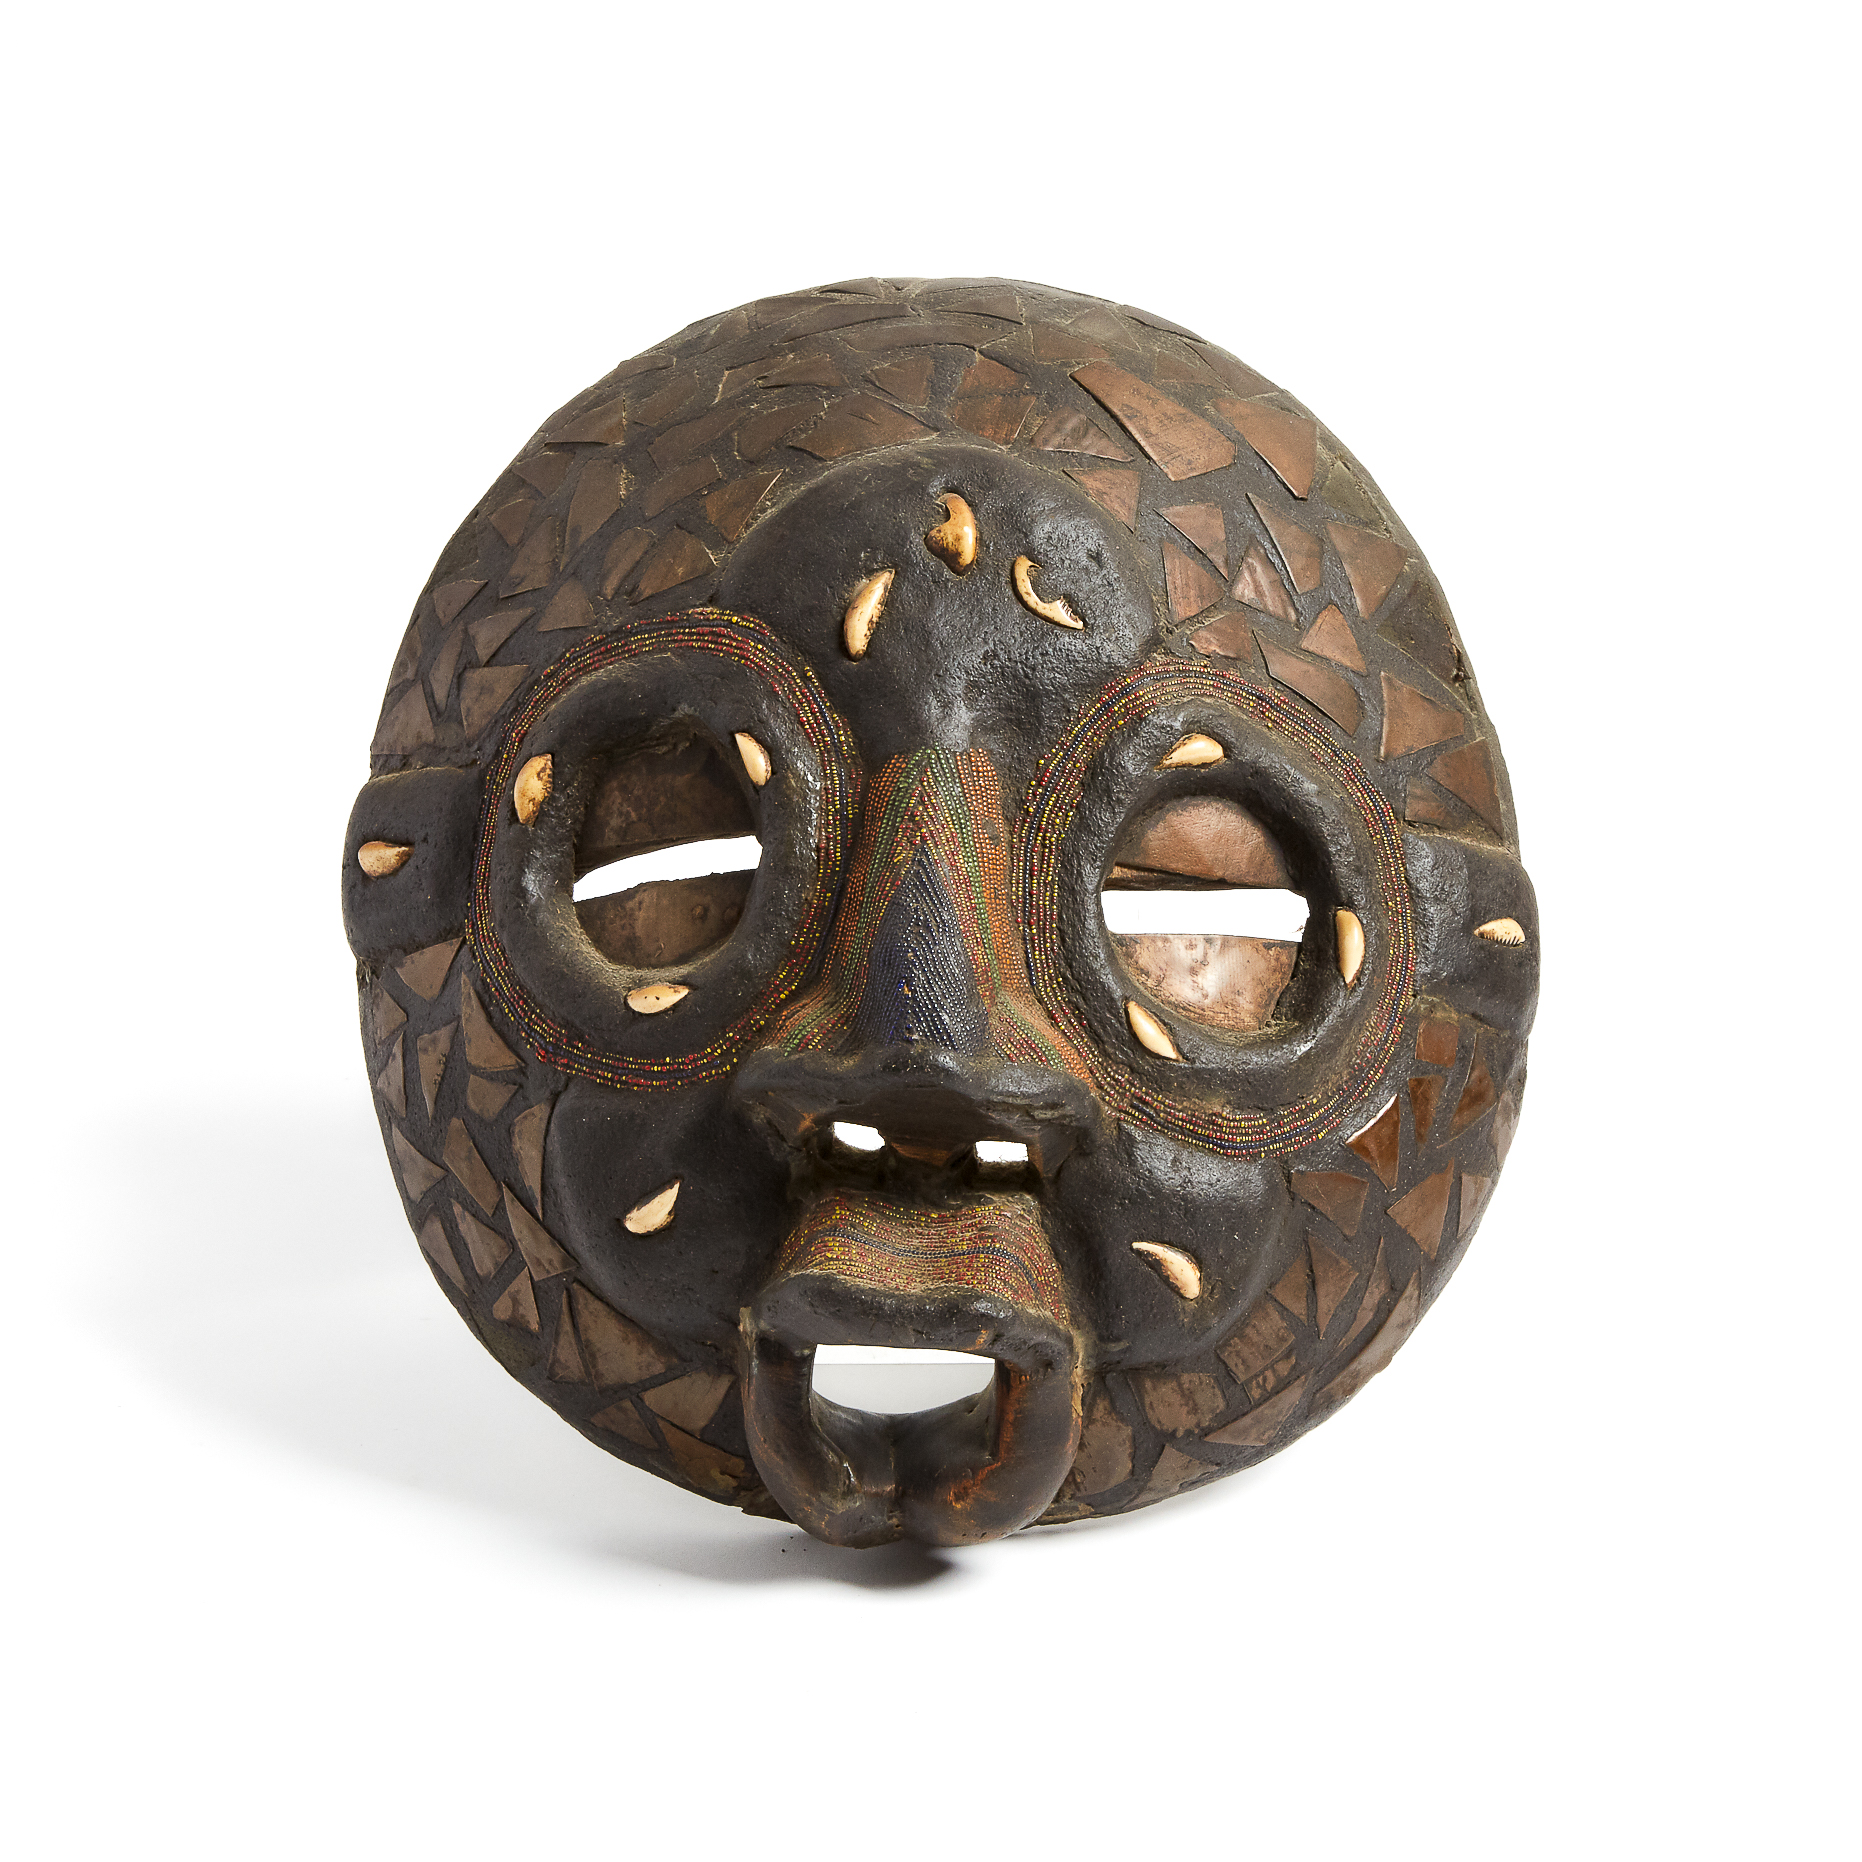 Ashanti Mask, Ghana, West Africa